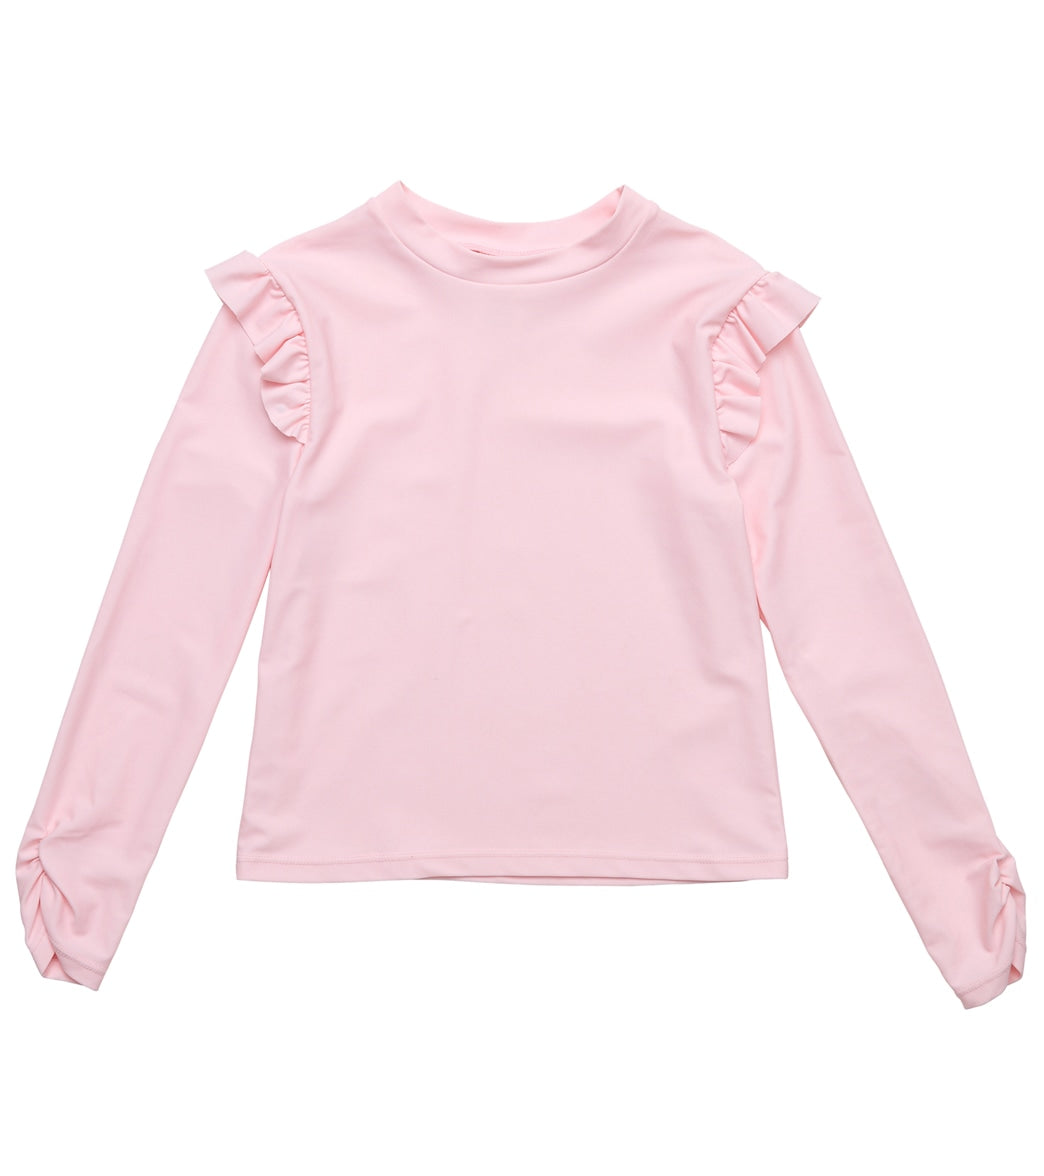 Snapper Rock Girls Ballet Pink Long Sleeve Rash Guard (Toddler, Little Kid, Big Kid)